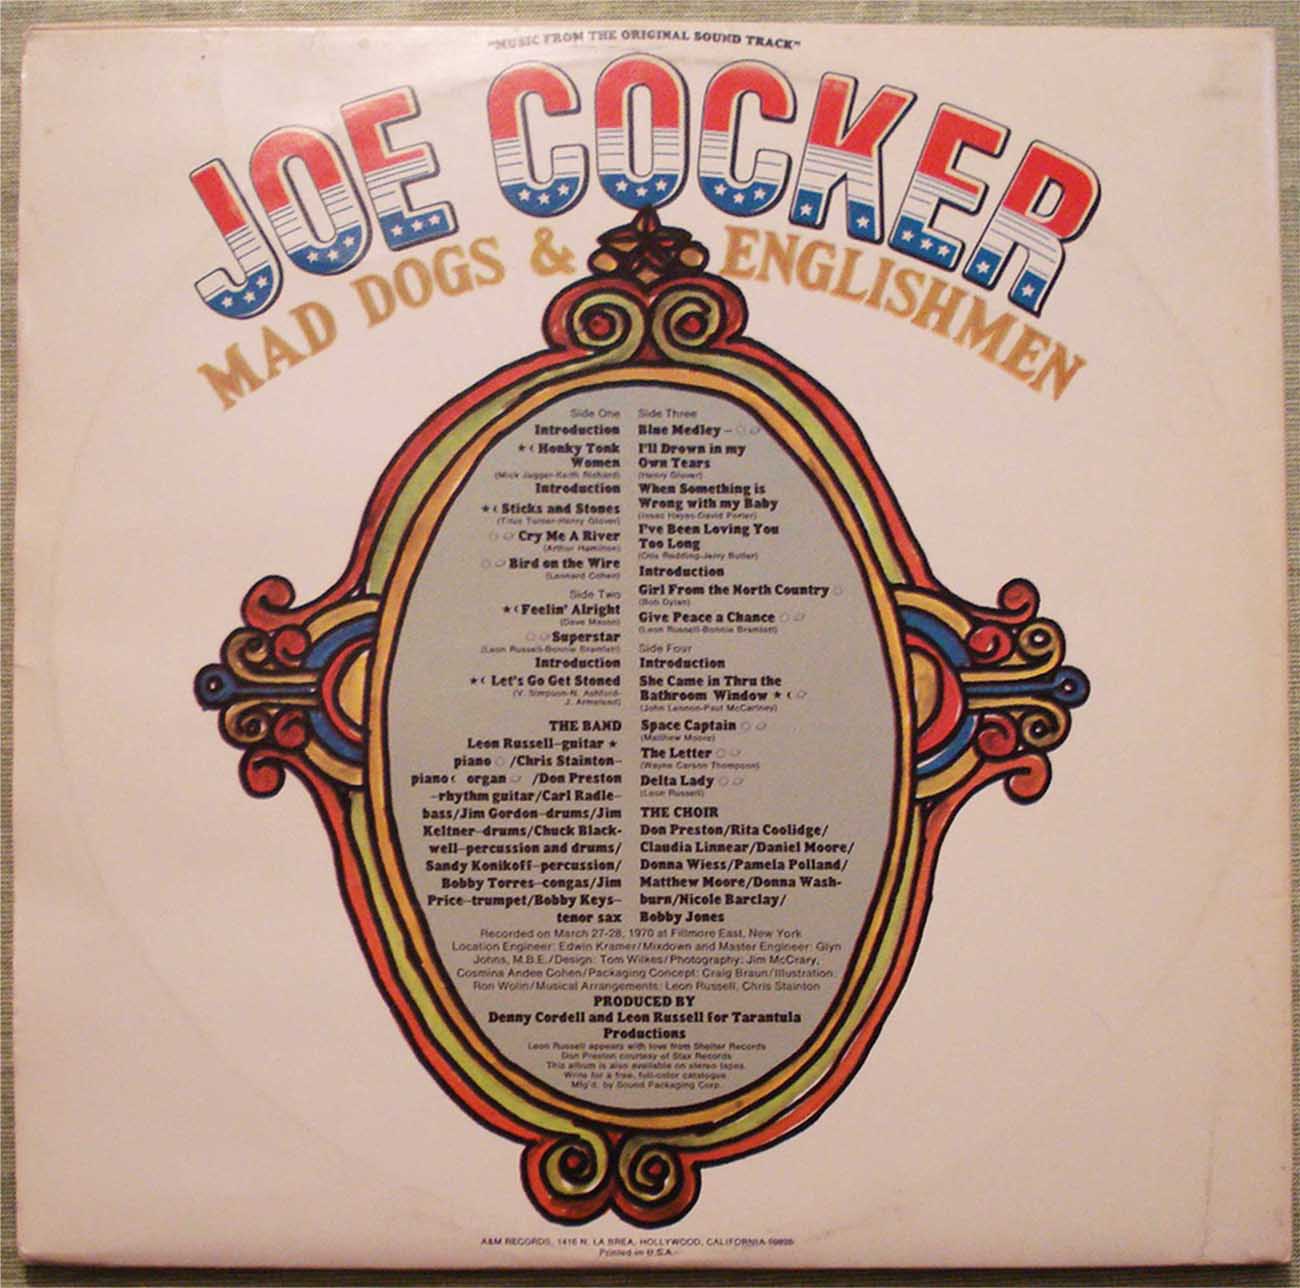 Joe Cocker - Mad Dogs and Englishmen (1971) Vinyl LP 33rpm SP6002